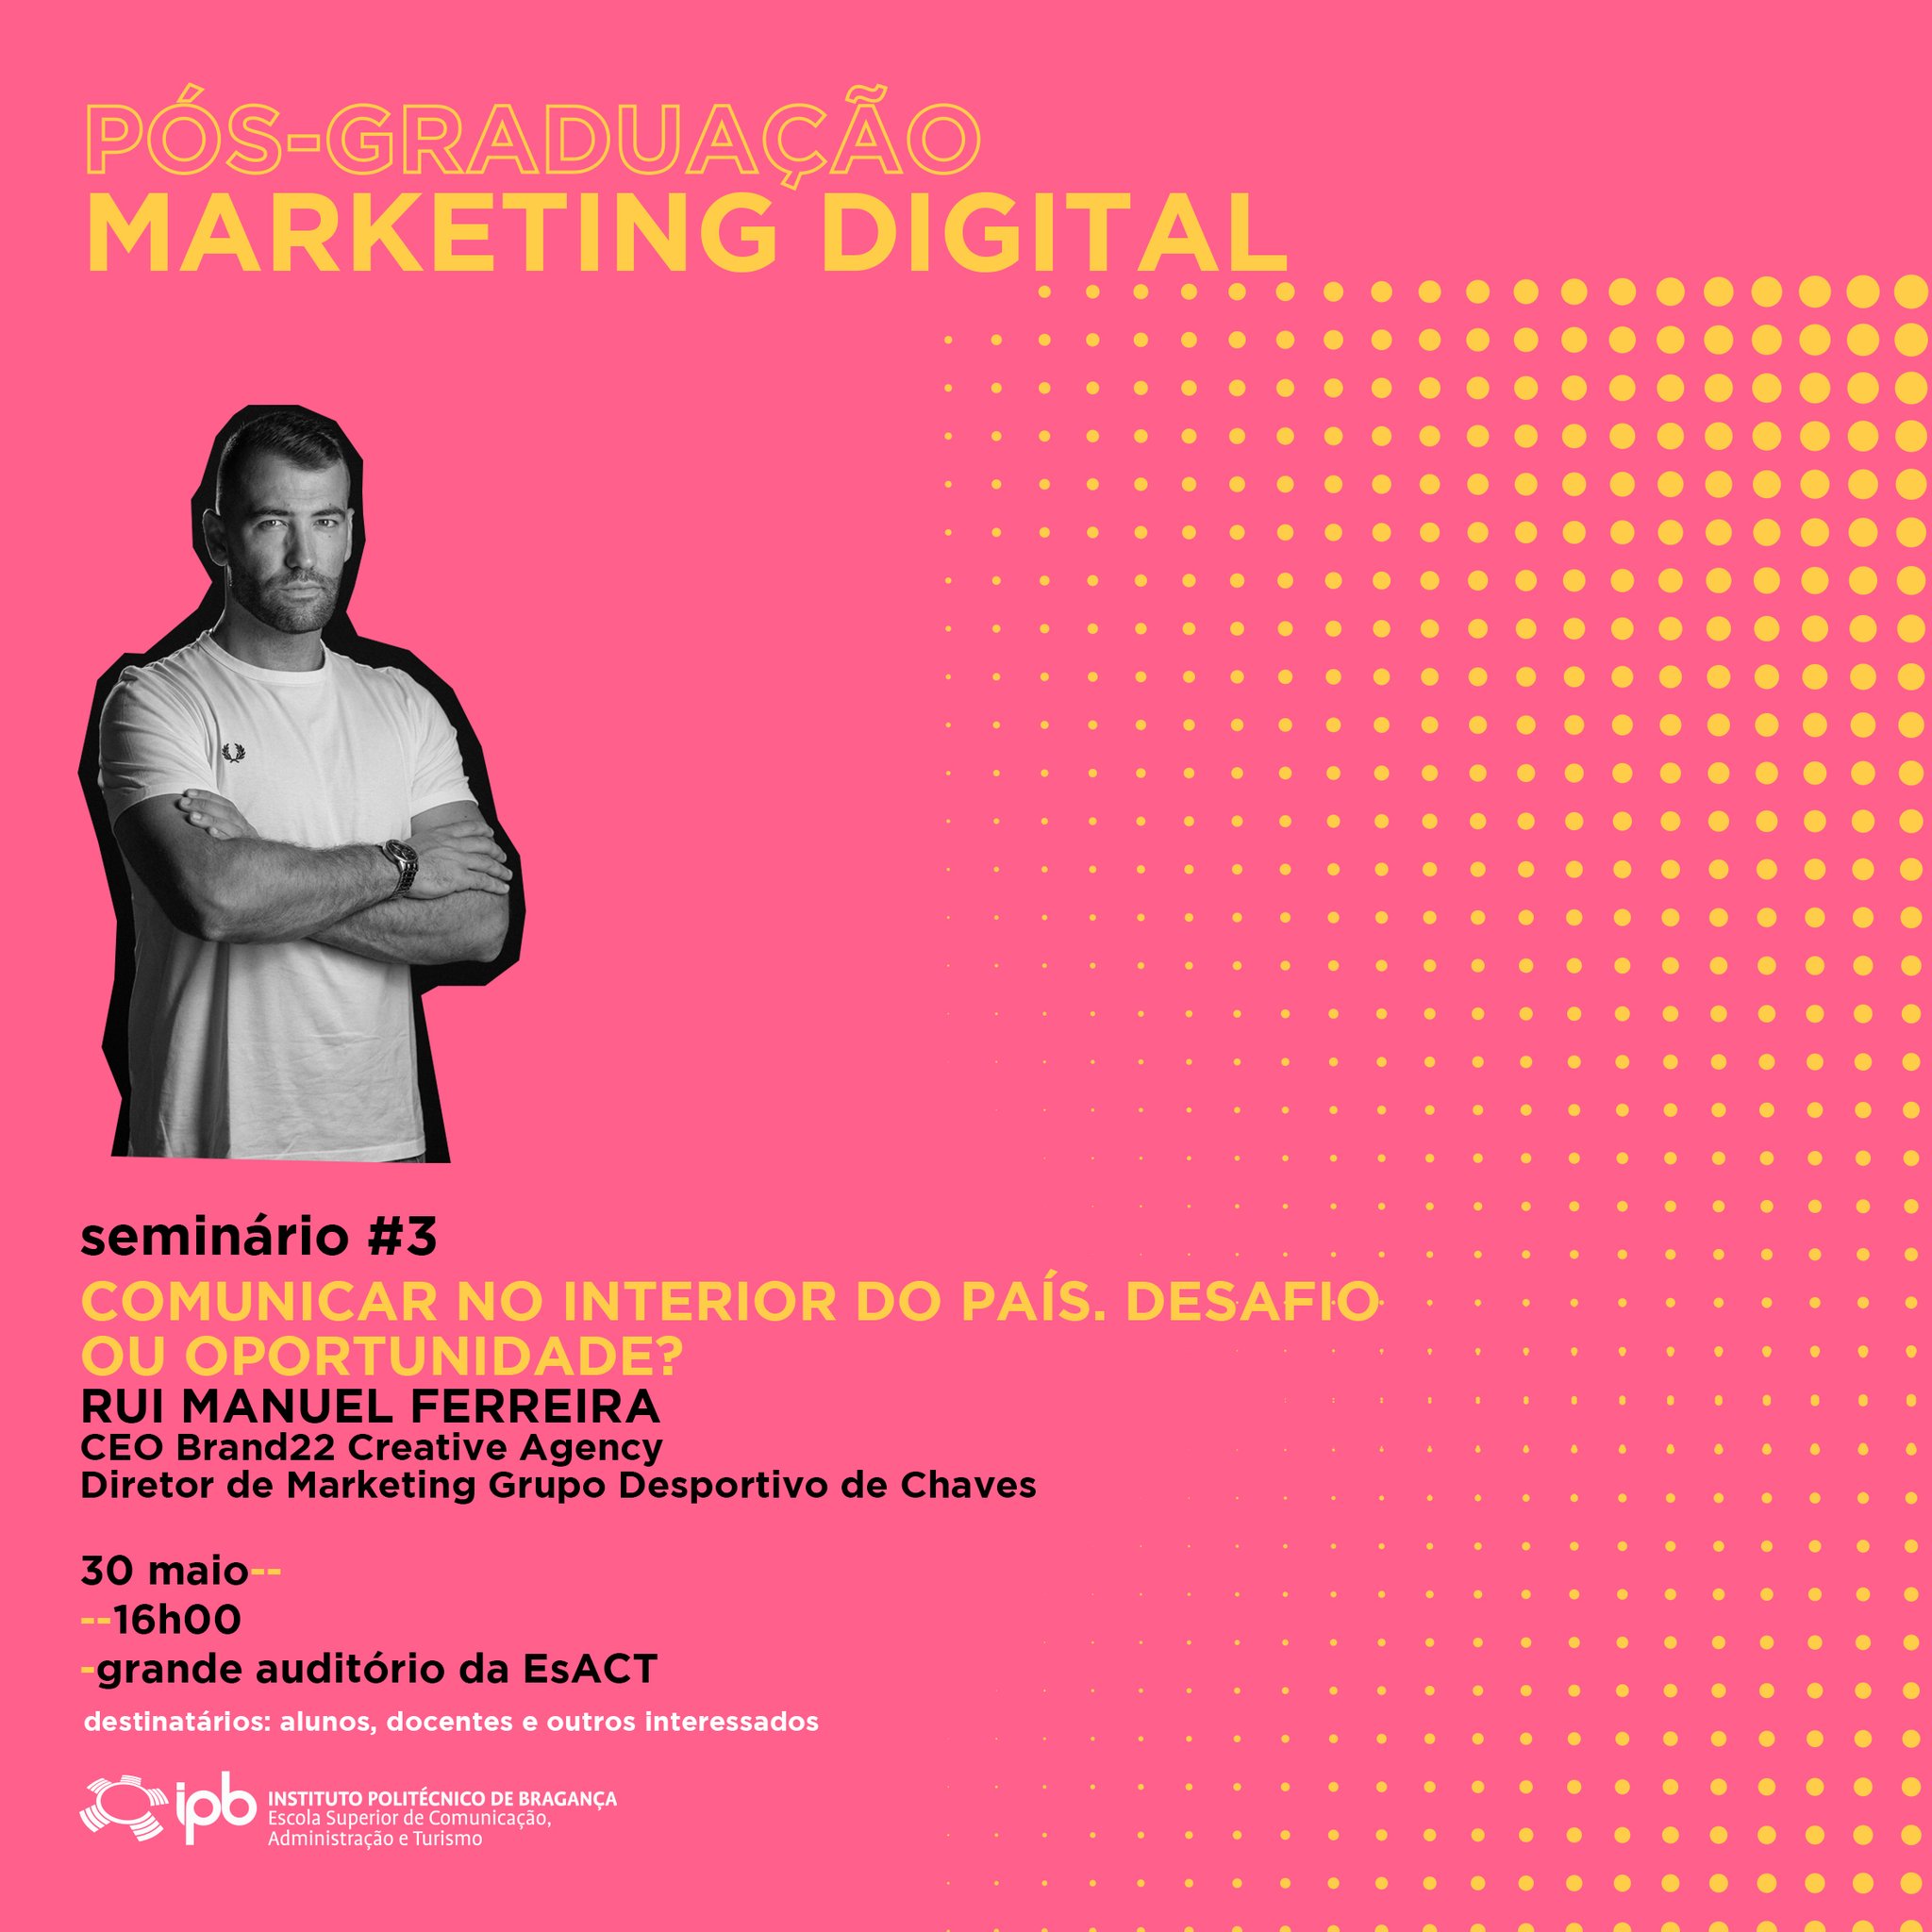 Rui Manuel Ferreira - CEO Brand22 Creative Agency